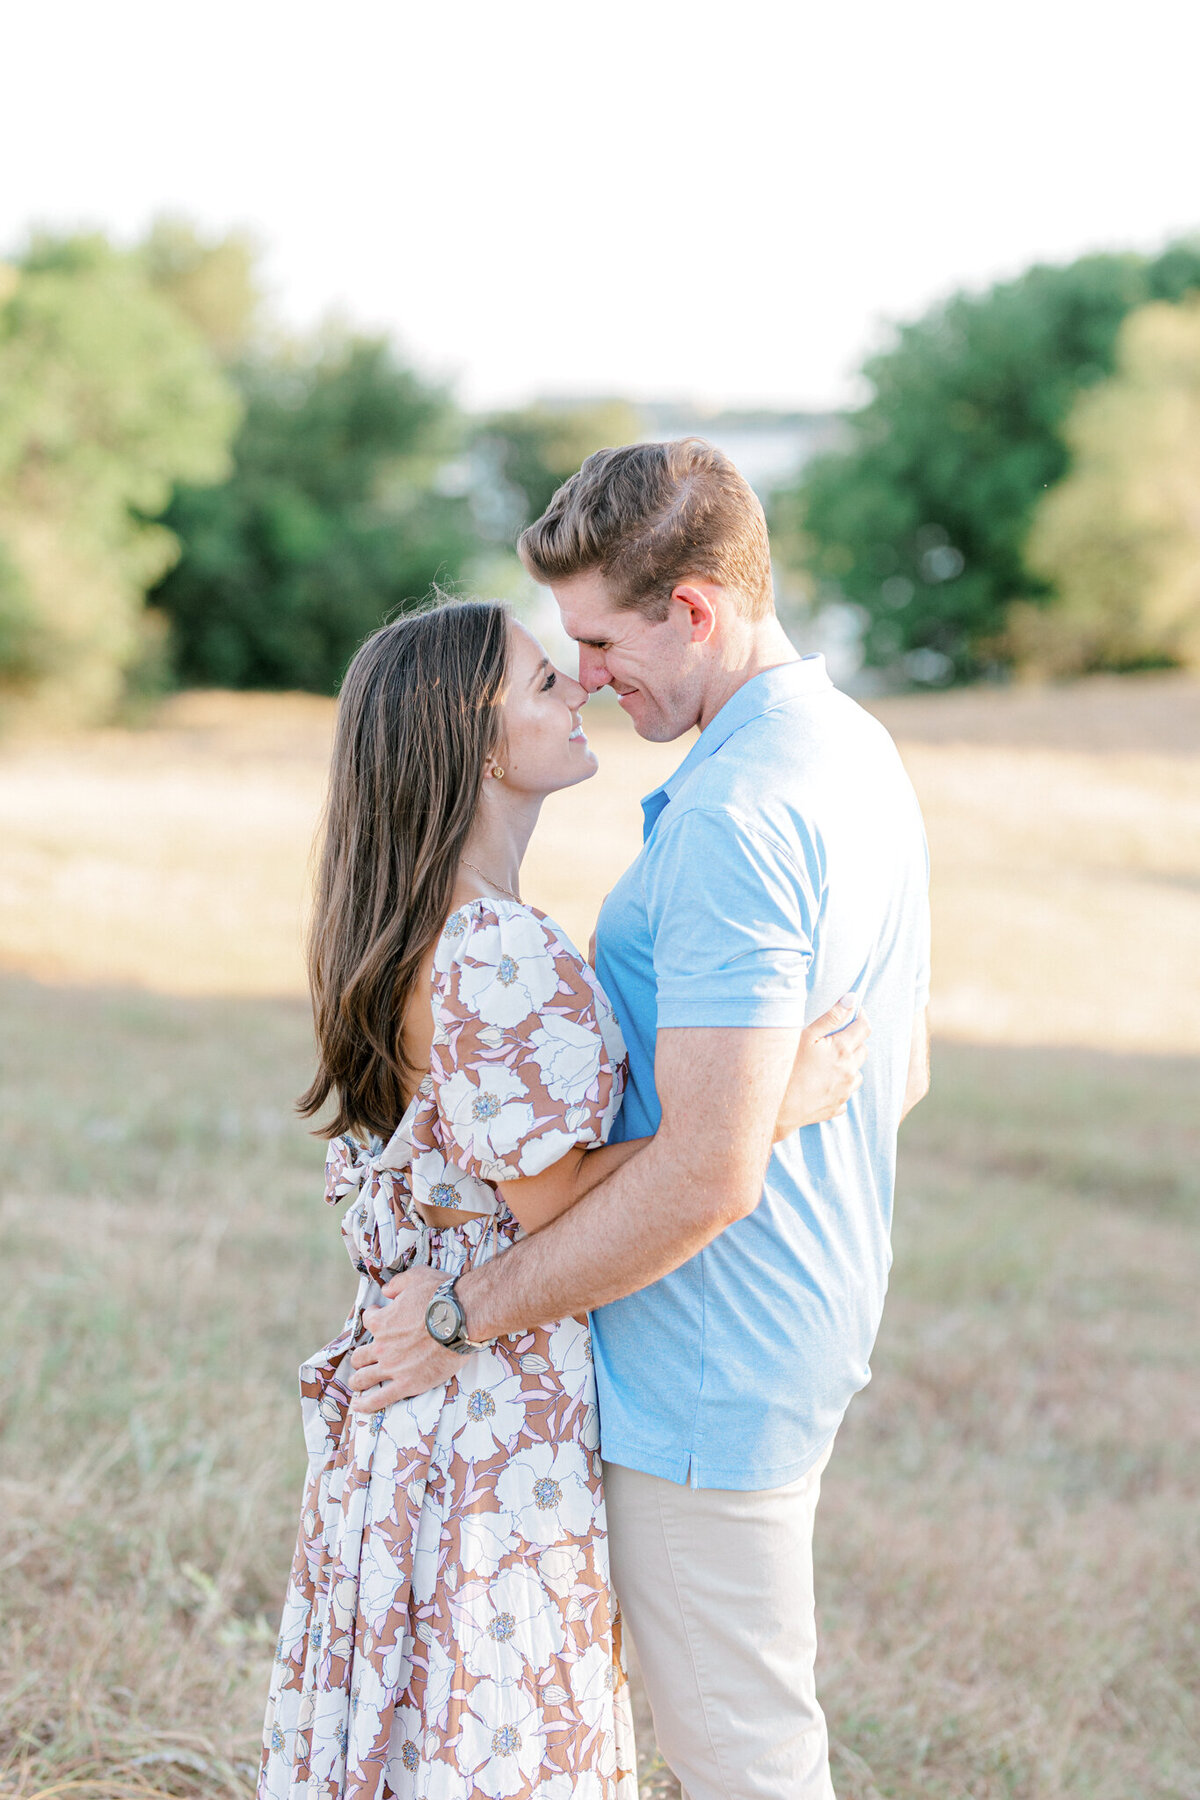 Allie & Nolan's Engagement Session at White Rock Lake | Dallas Wedding Photographer | Sami Kathryn Photography-3